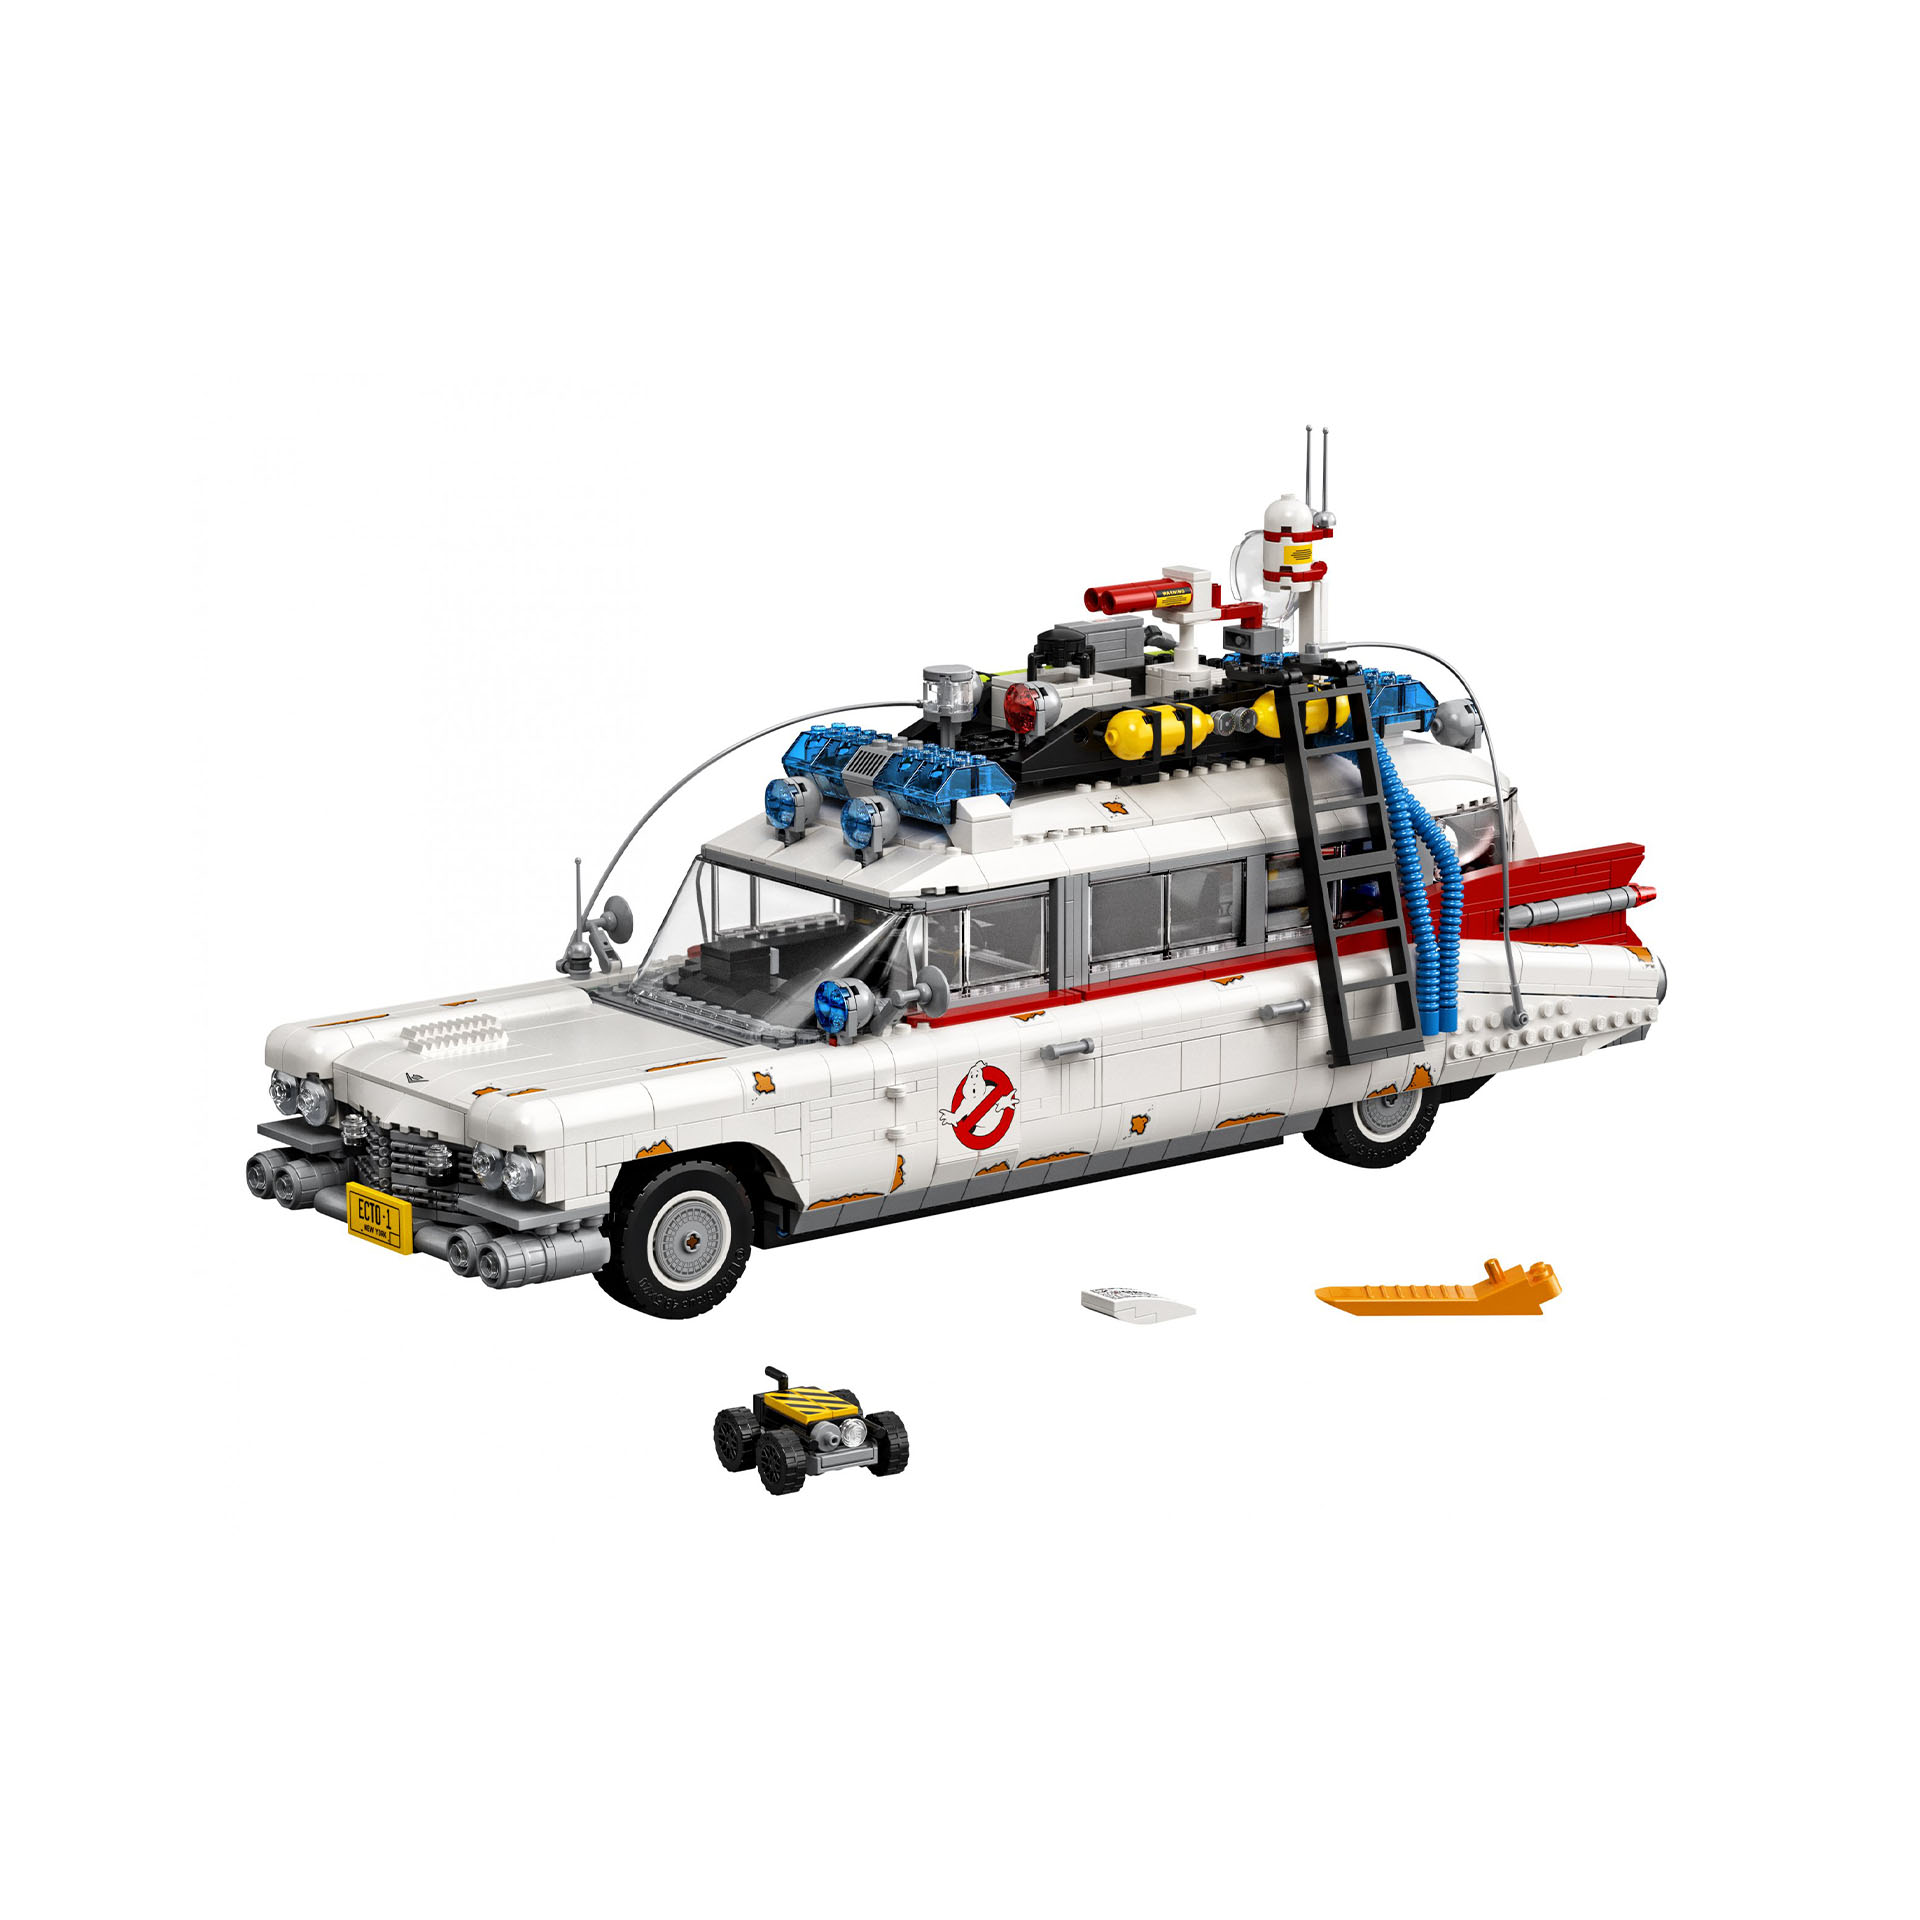 LEGO Creator Expert ECTO-1 Ghostbusters, Macchina Grande da Collezione, Set da E 10274, , large